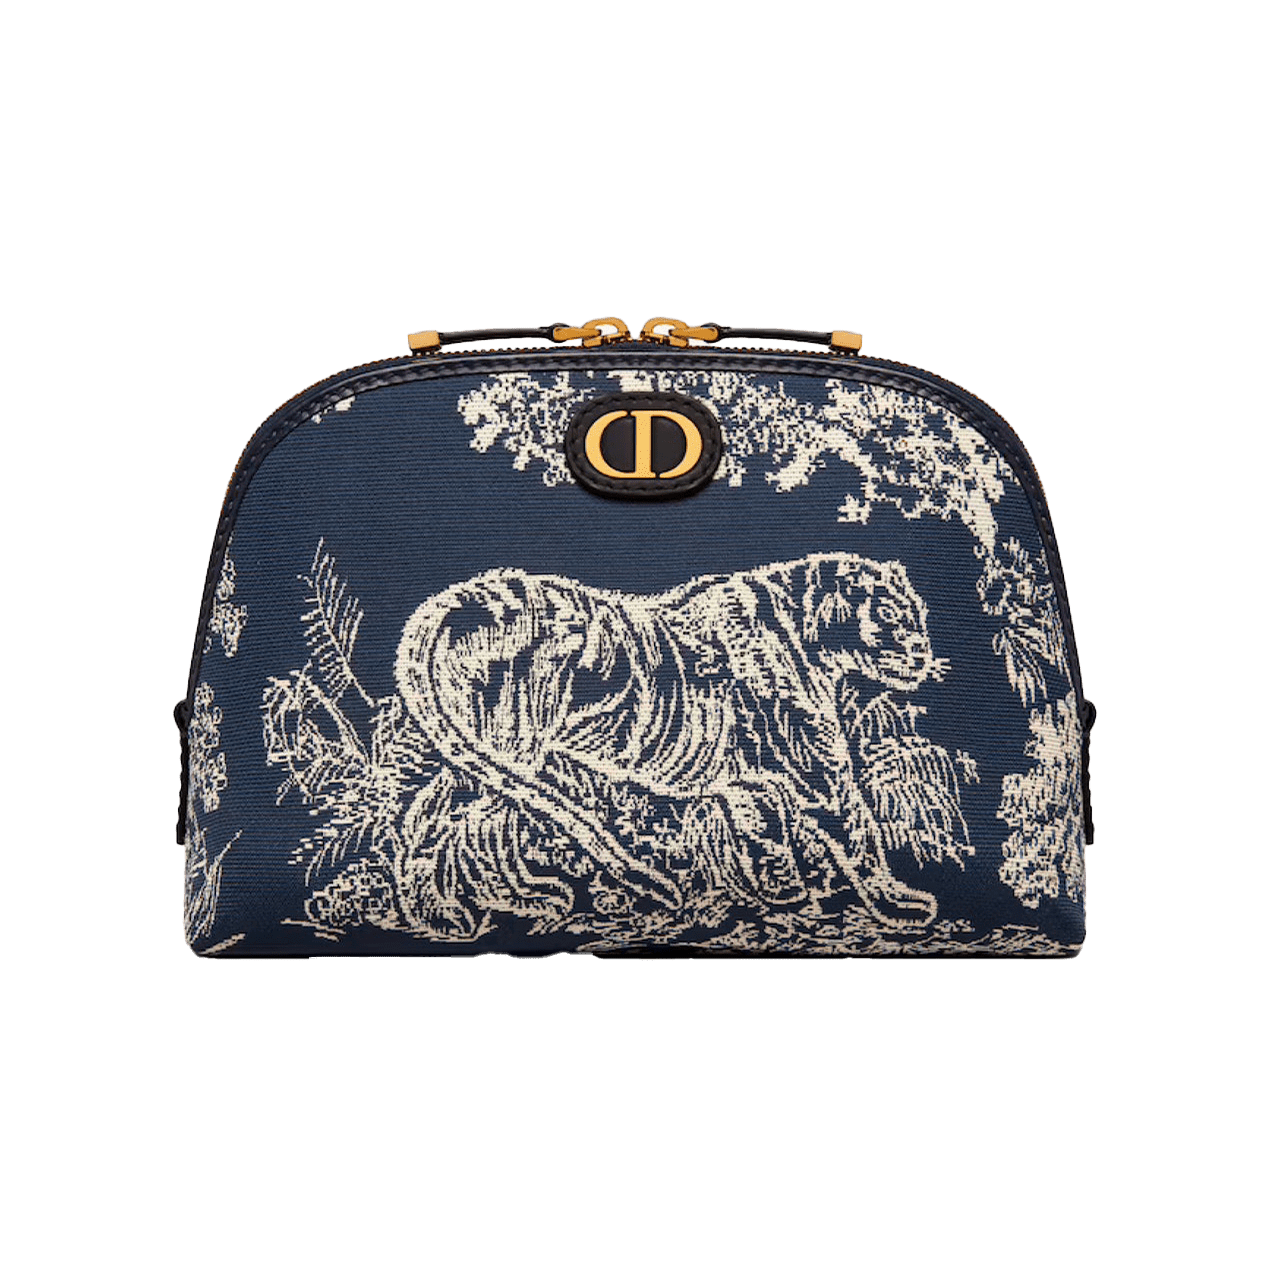 Dior 30 montaigne beauty pouch